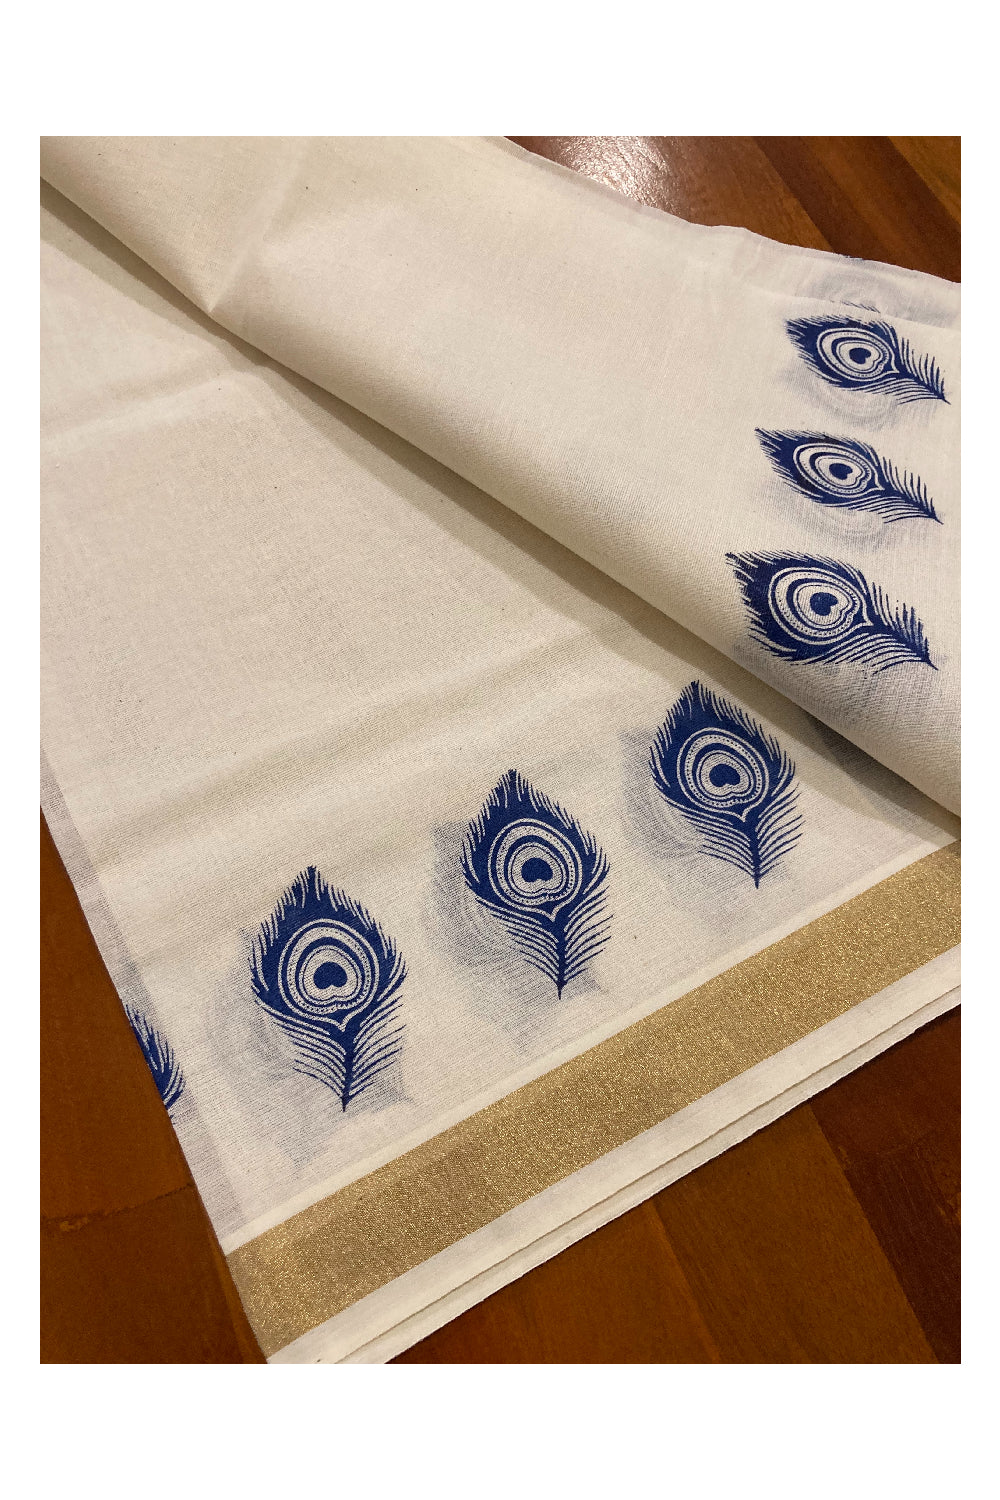 Kerala Cotton Kasavu Set Mundu (Mundum Neriyathum) with Blue Feather and Temple Block Prints on Border